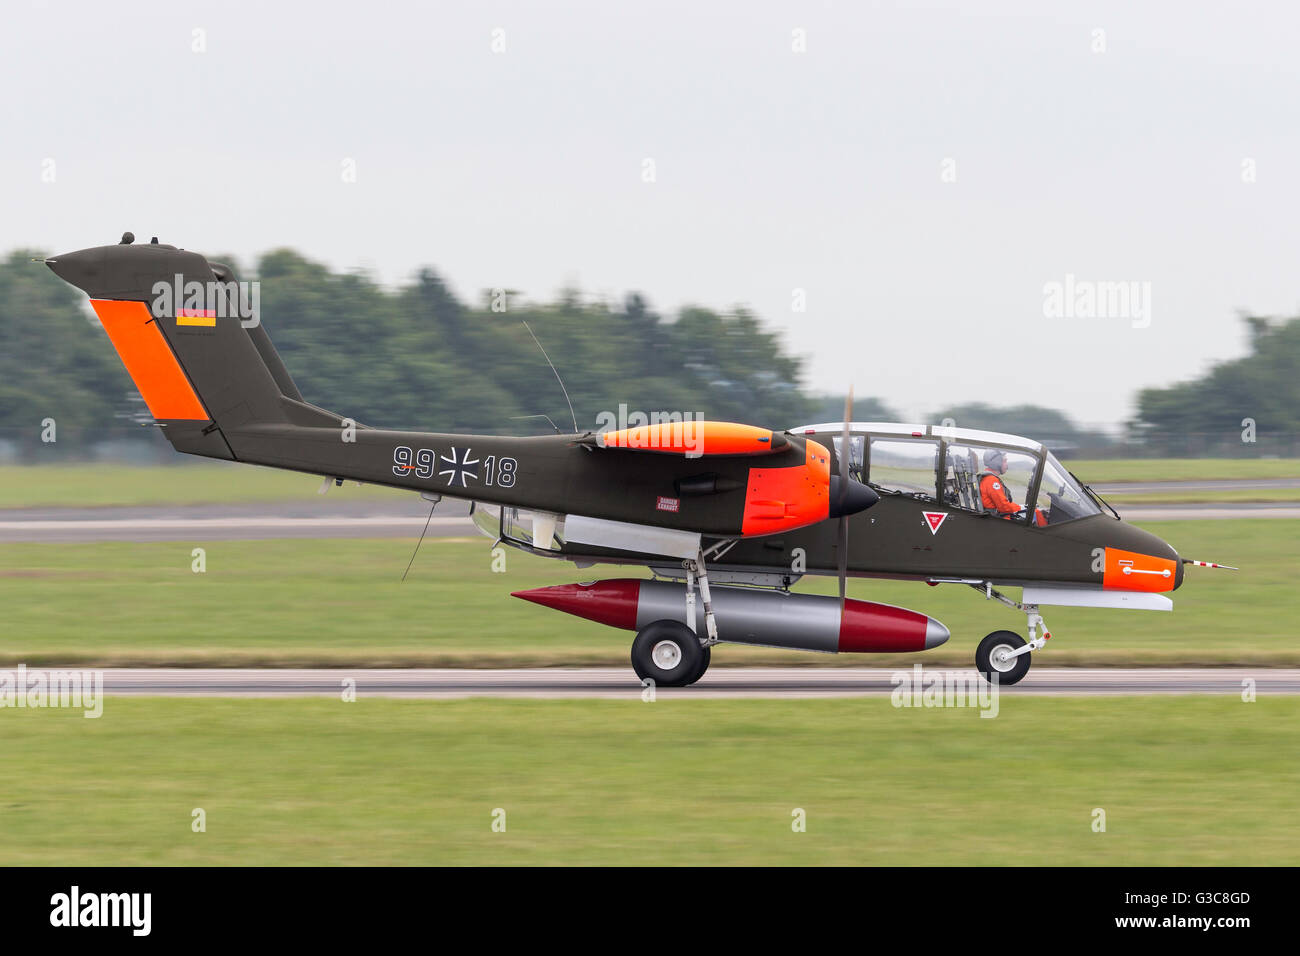 North American Aviation - Rockwell OV-10B Bronco G-ONAA aircraft in German military markings Stock Photo